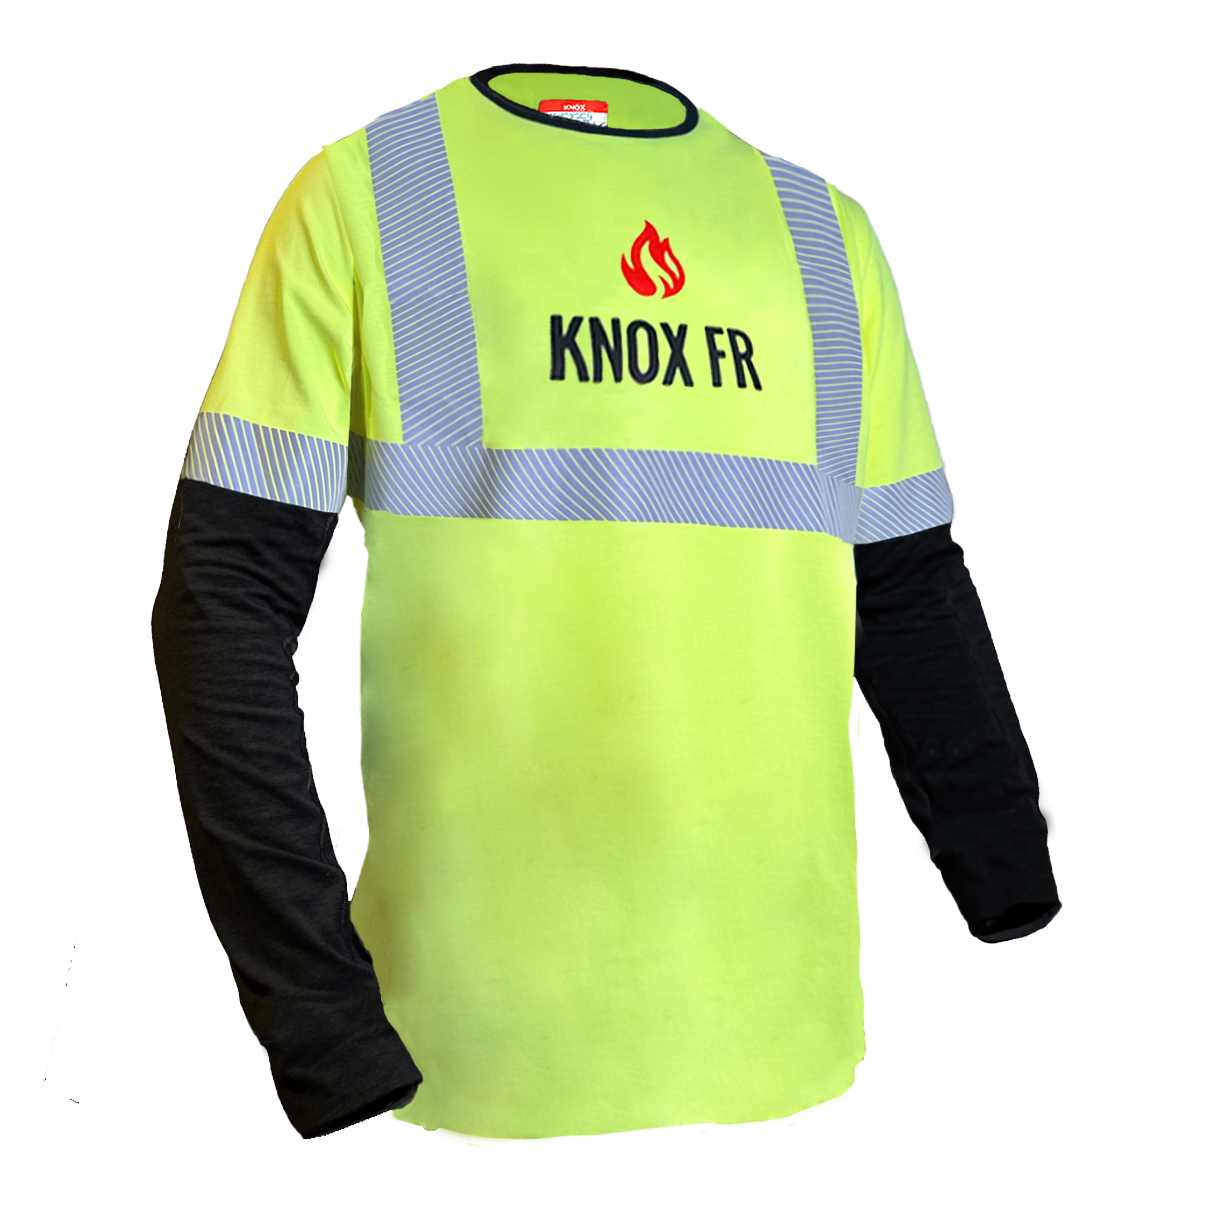 Knox FR High Visibility Crew Shirt